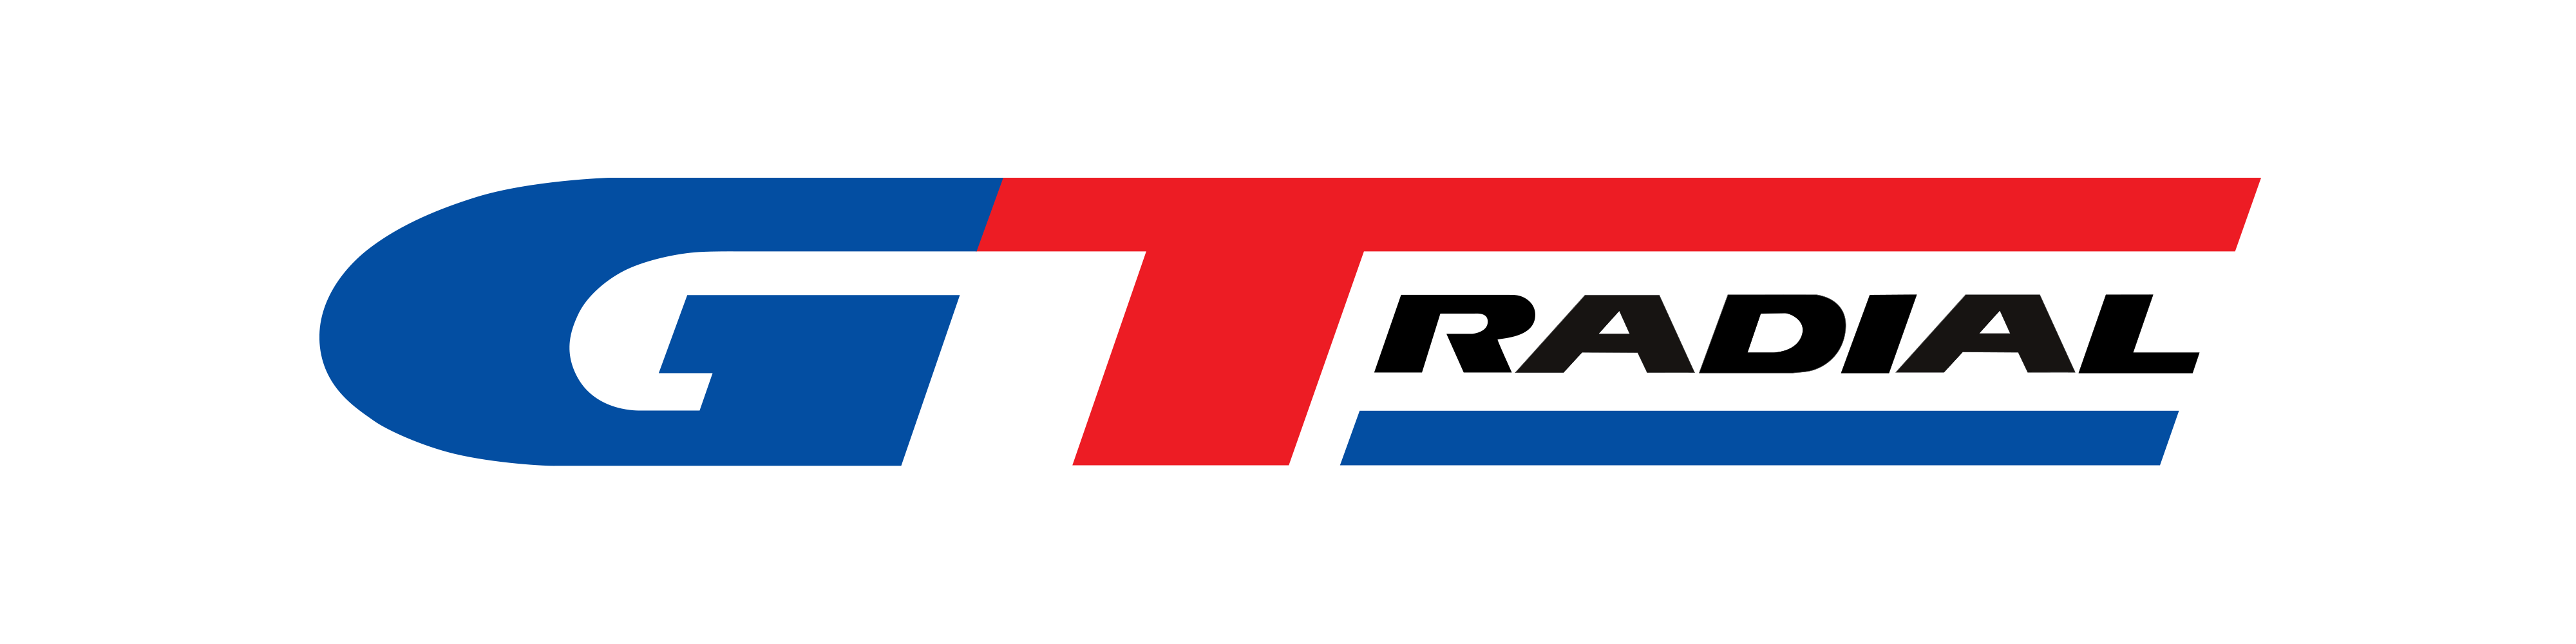 GT-Radial-Tires-logo-4000x1000